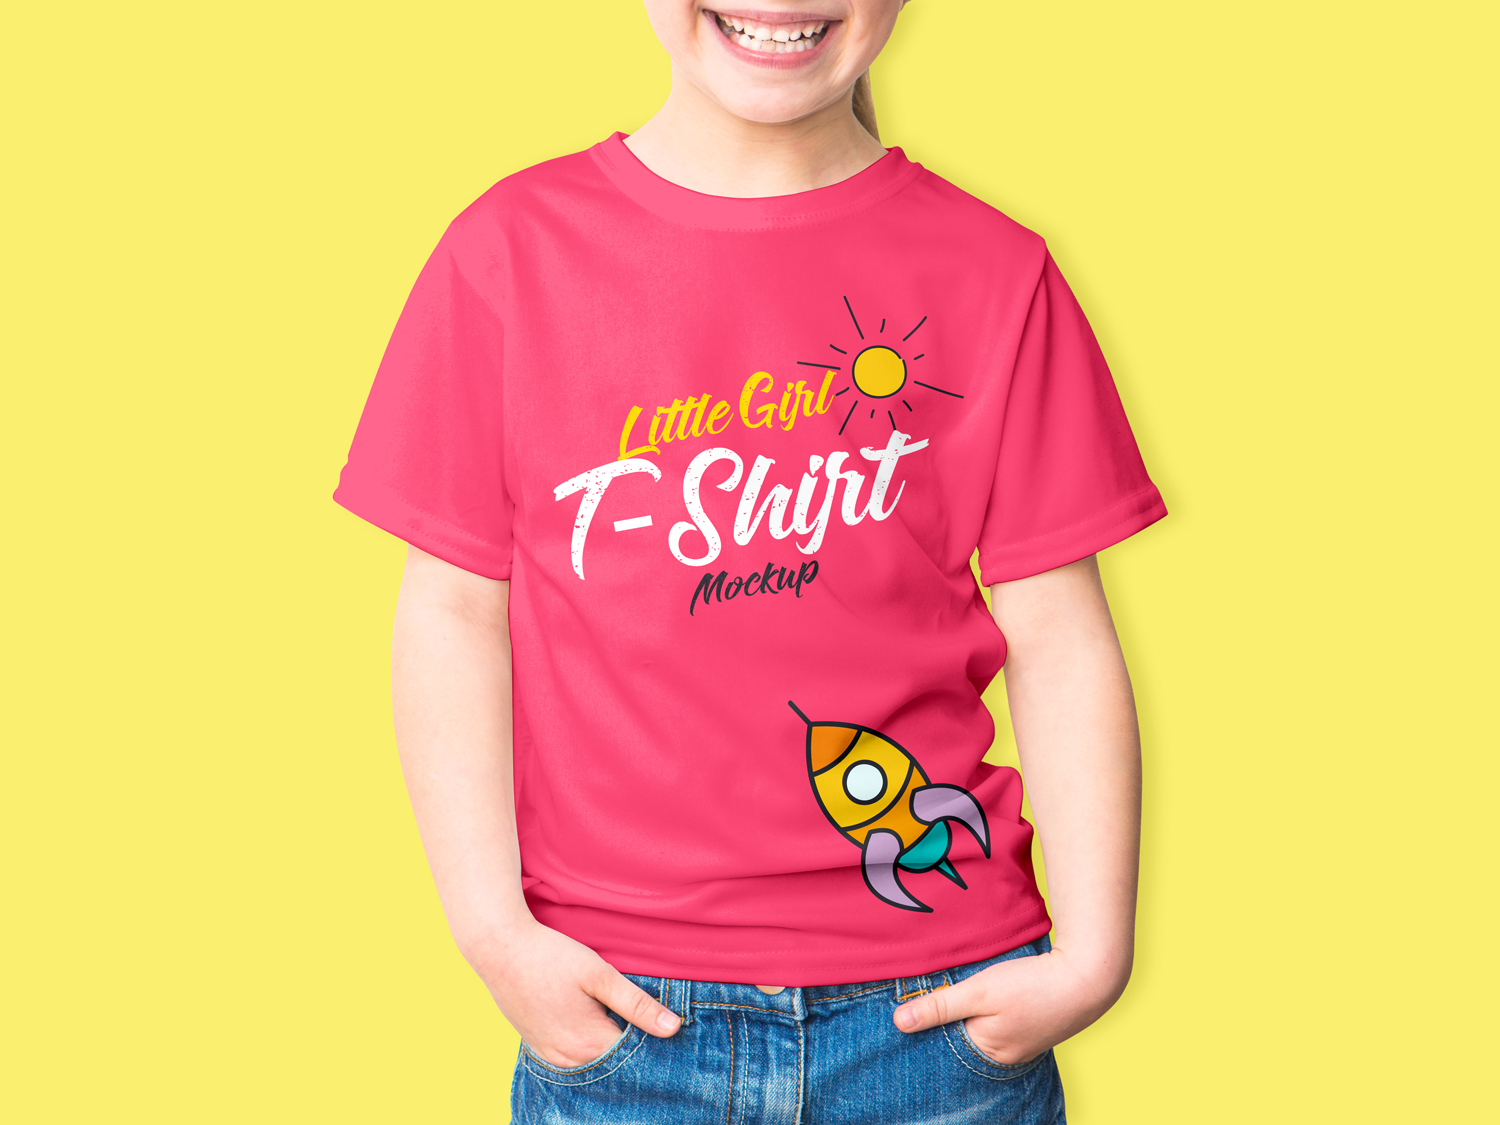 Free Fashionable Girl T-Shirt Mockup